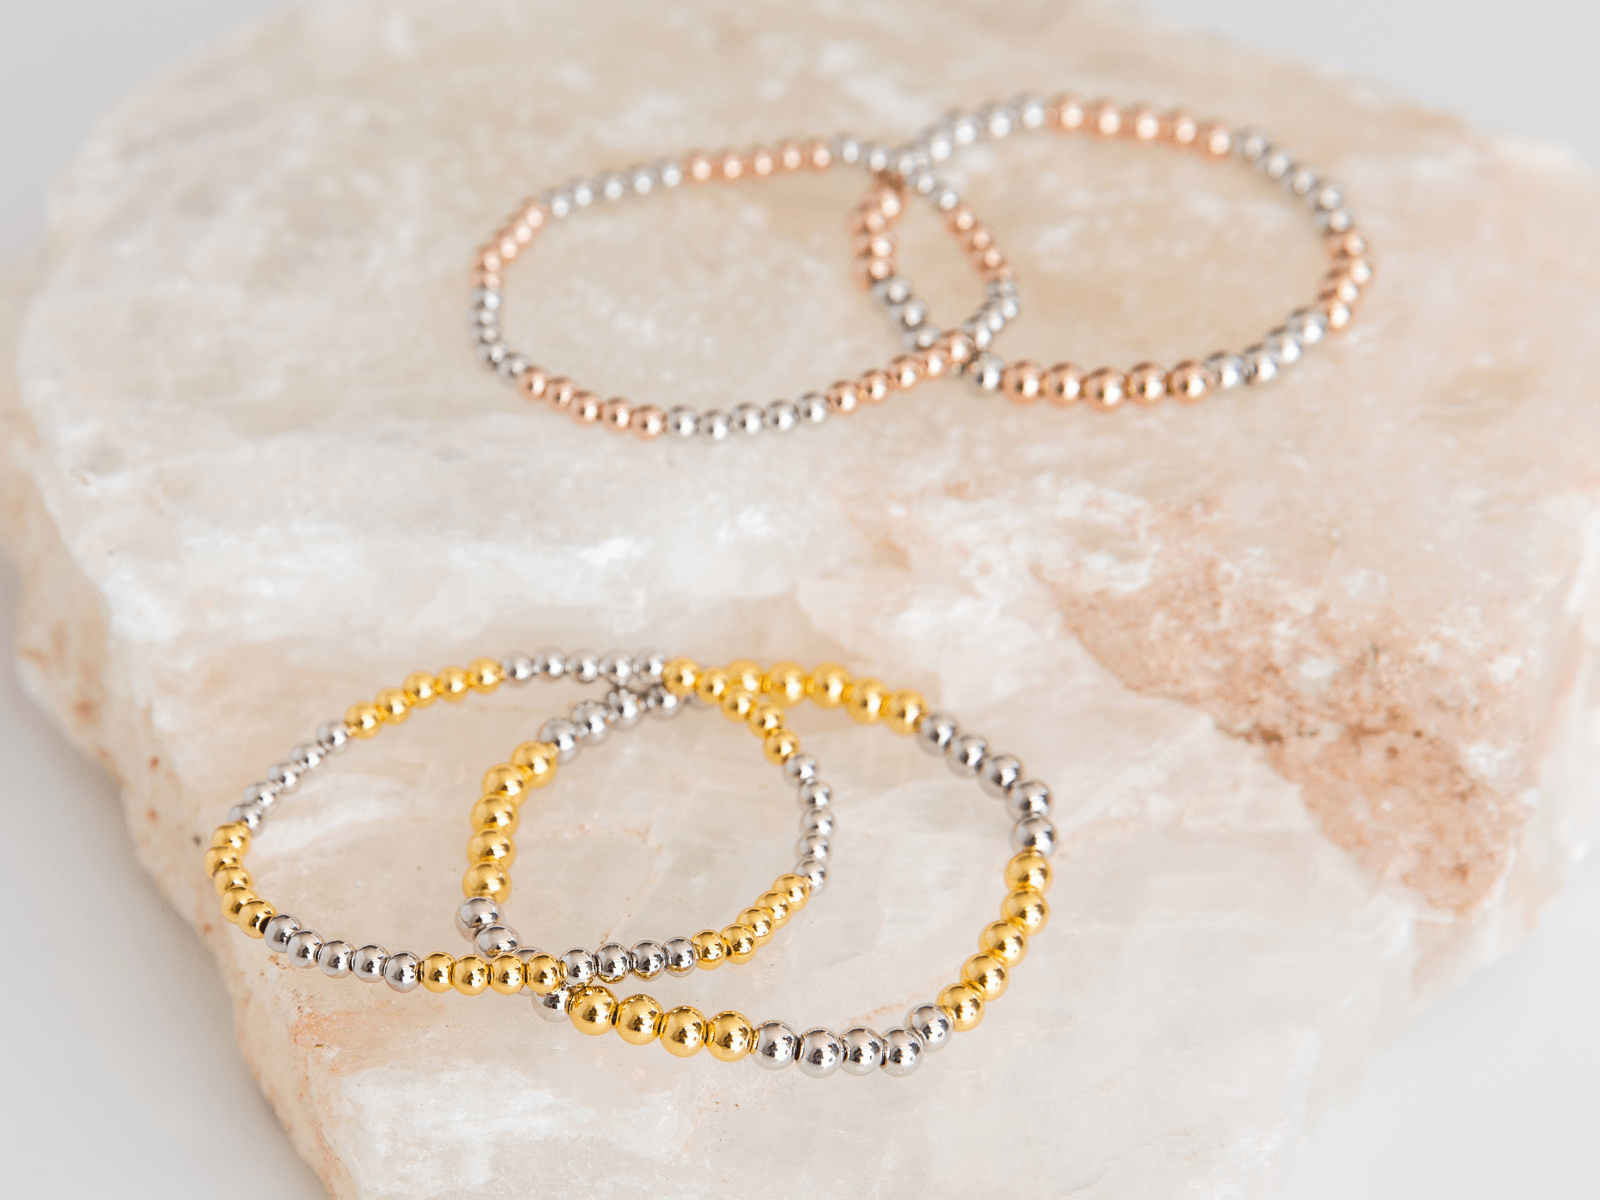 Two Tone Beaded Bracelet - Goldenerre Women's Apple Watch Bands and Jewelry